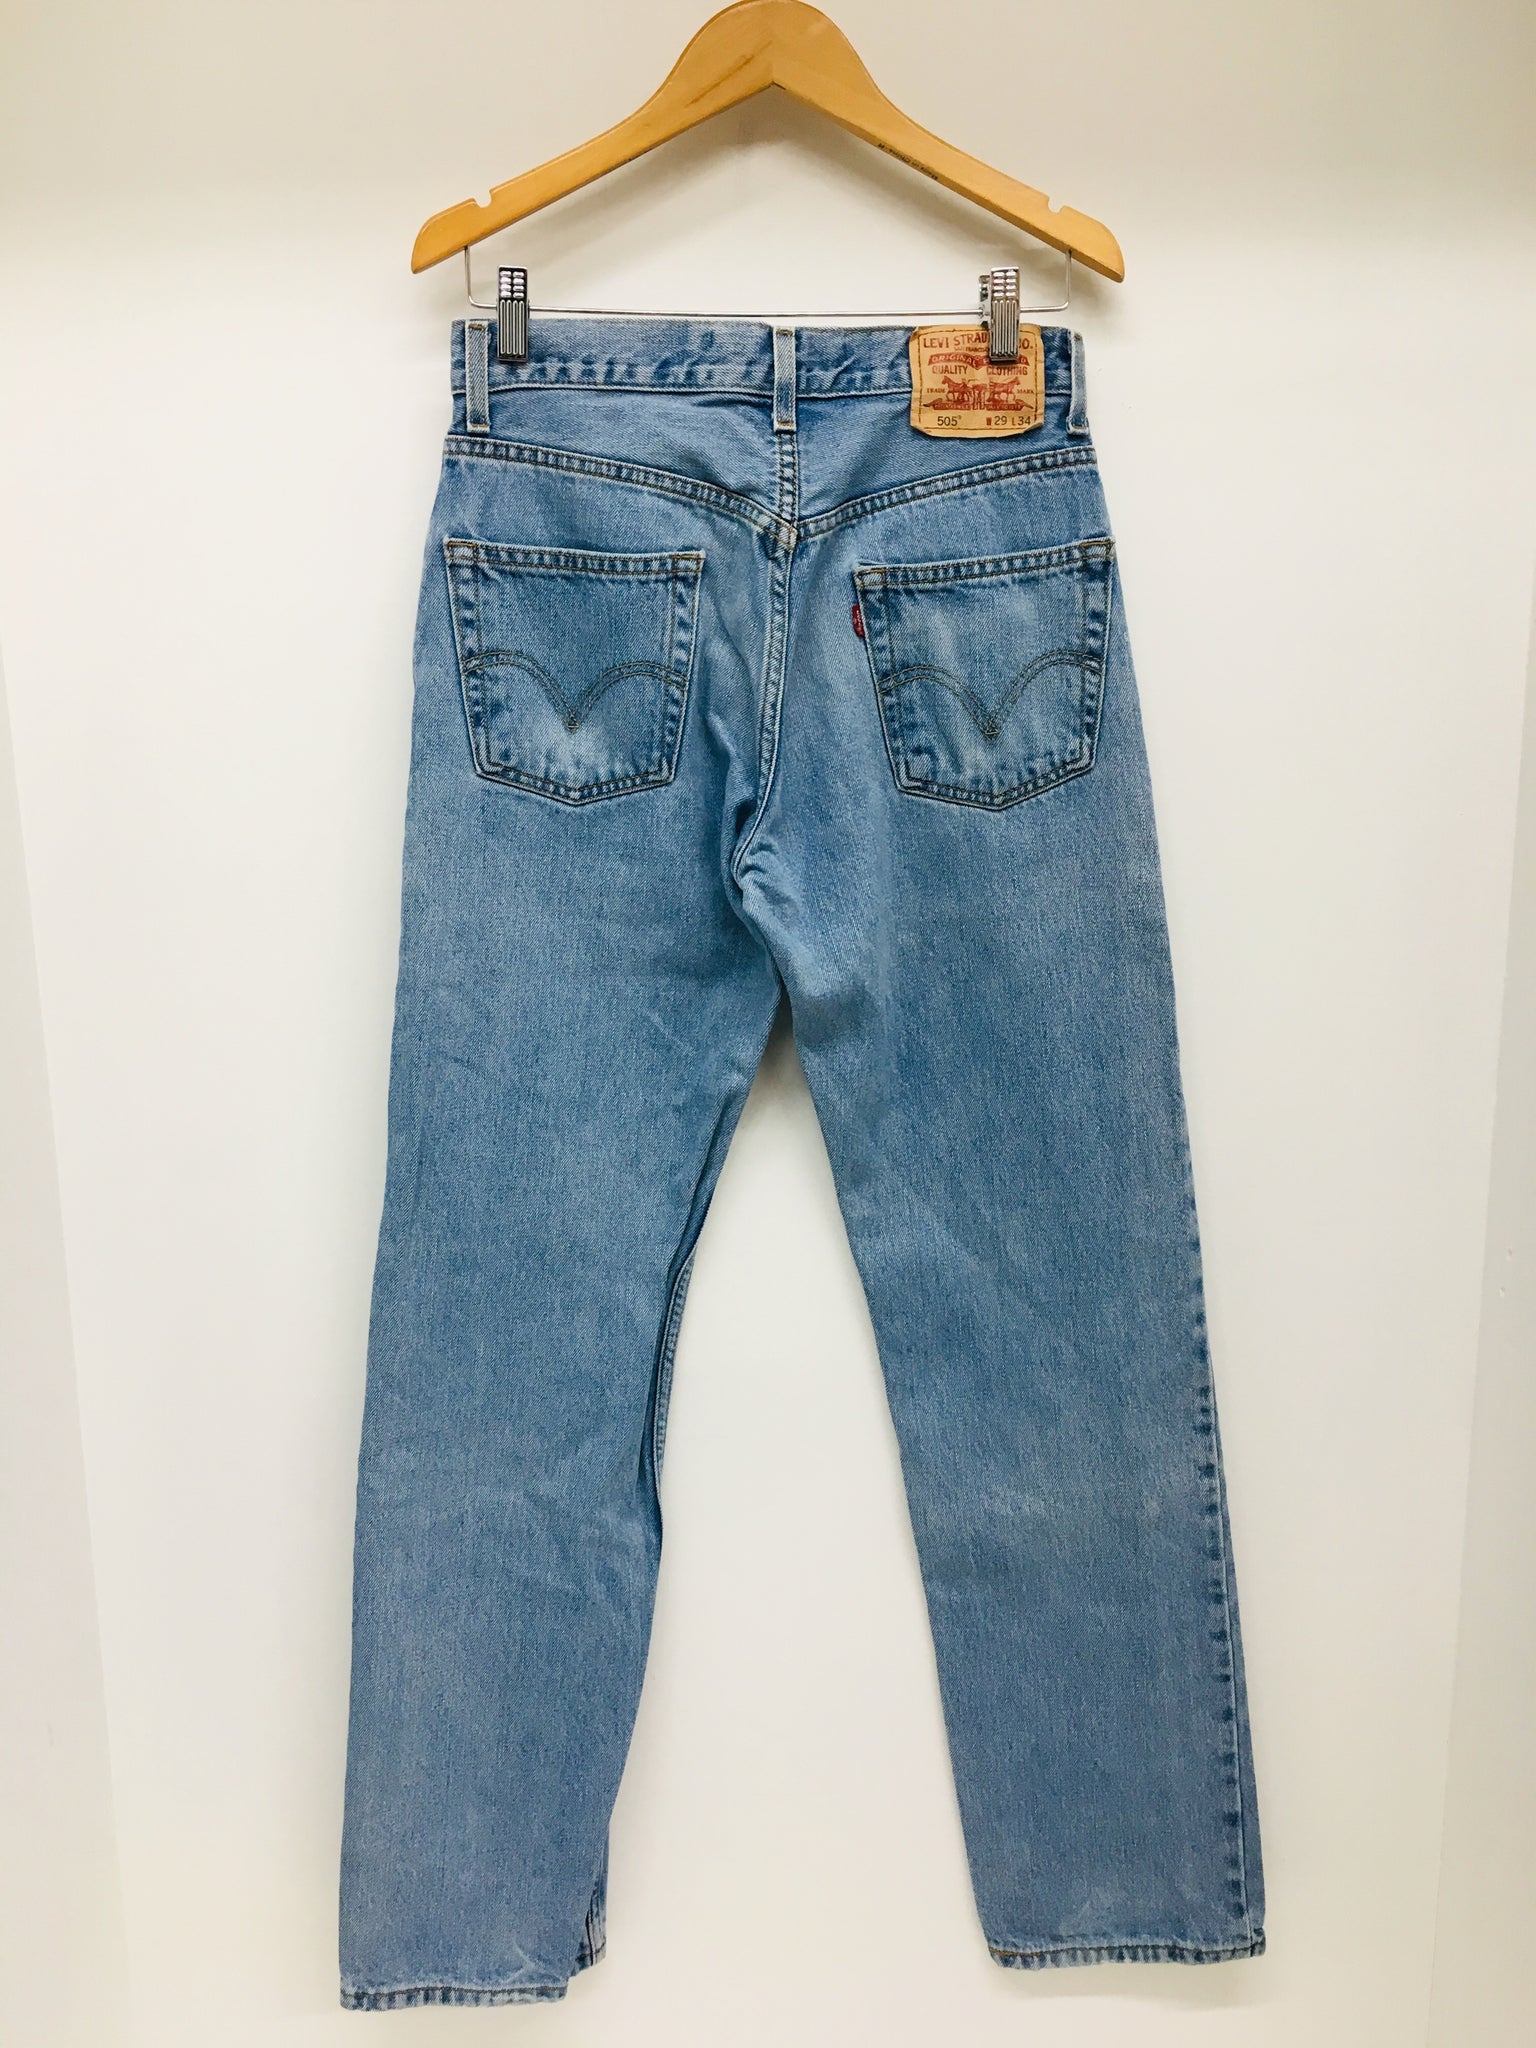 Men - Vintage Light Wash Jeans Size 29x34